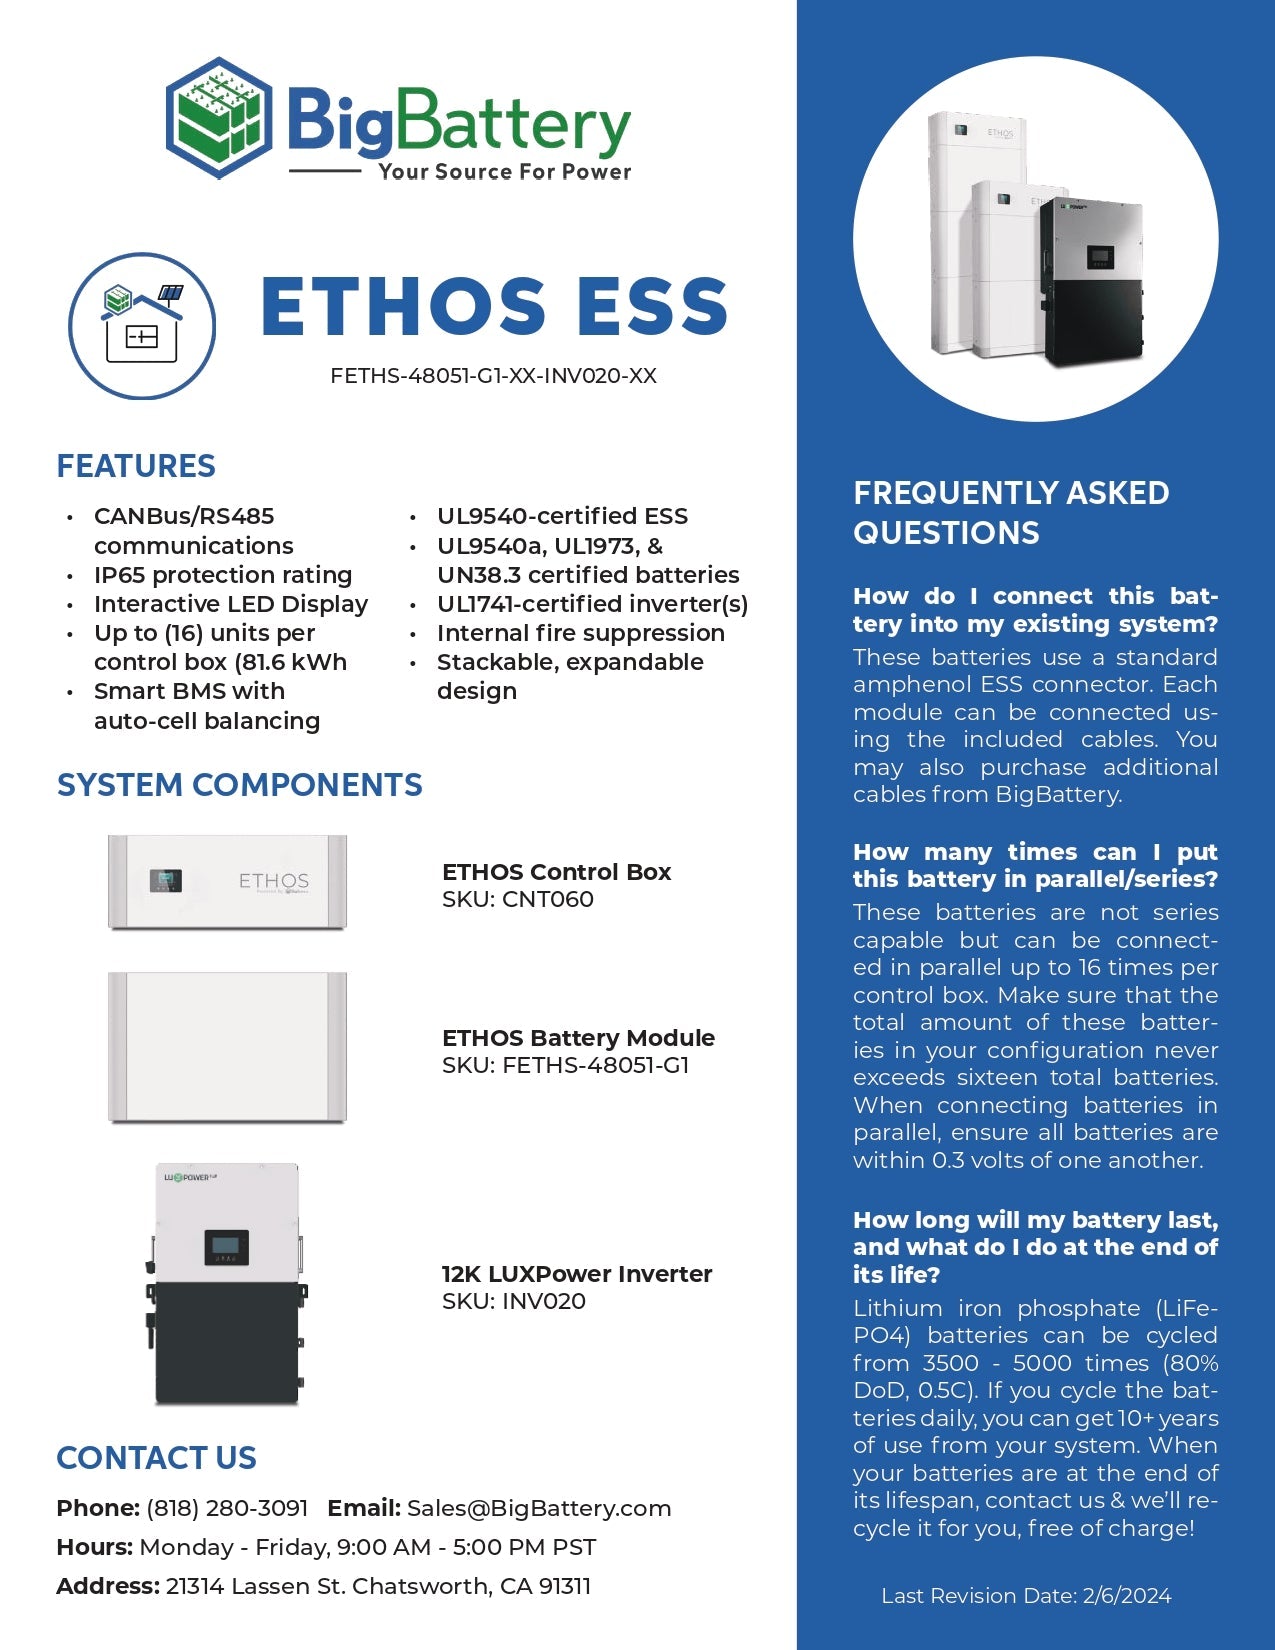 36kW 92.1kWh ETHOS Energy Storage System (ESS)